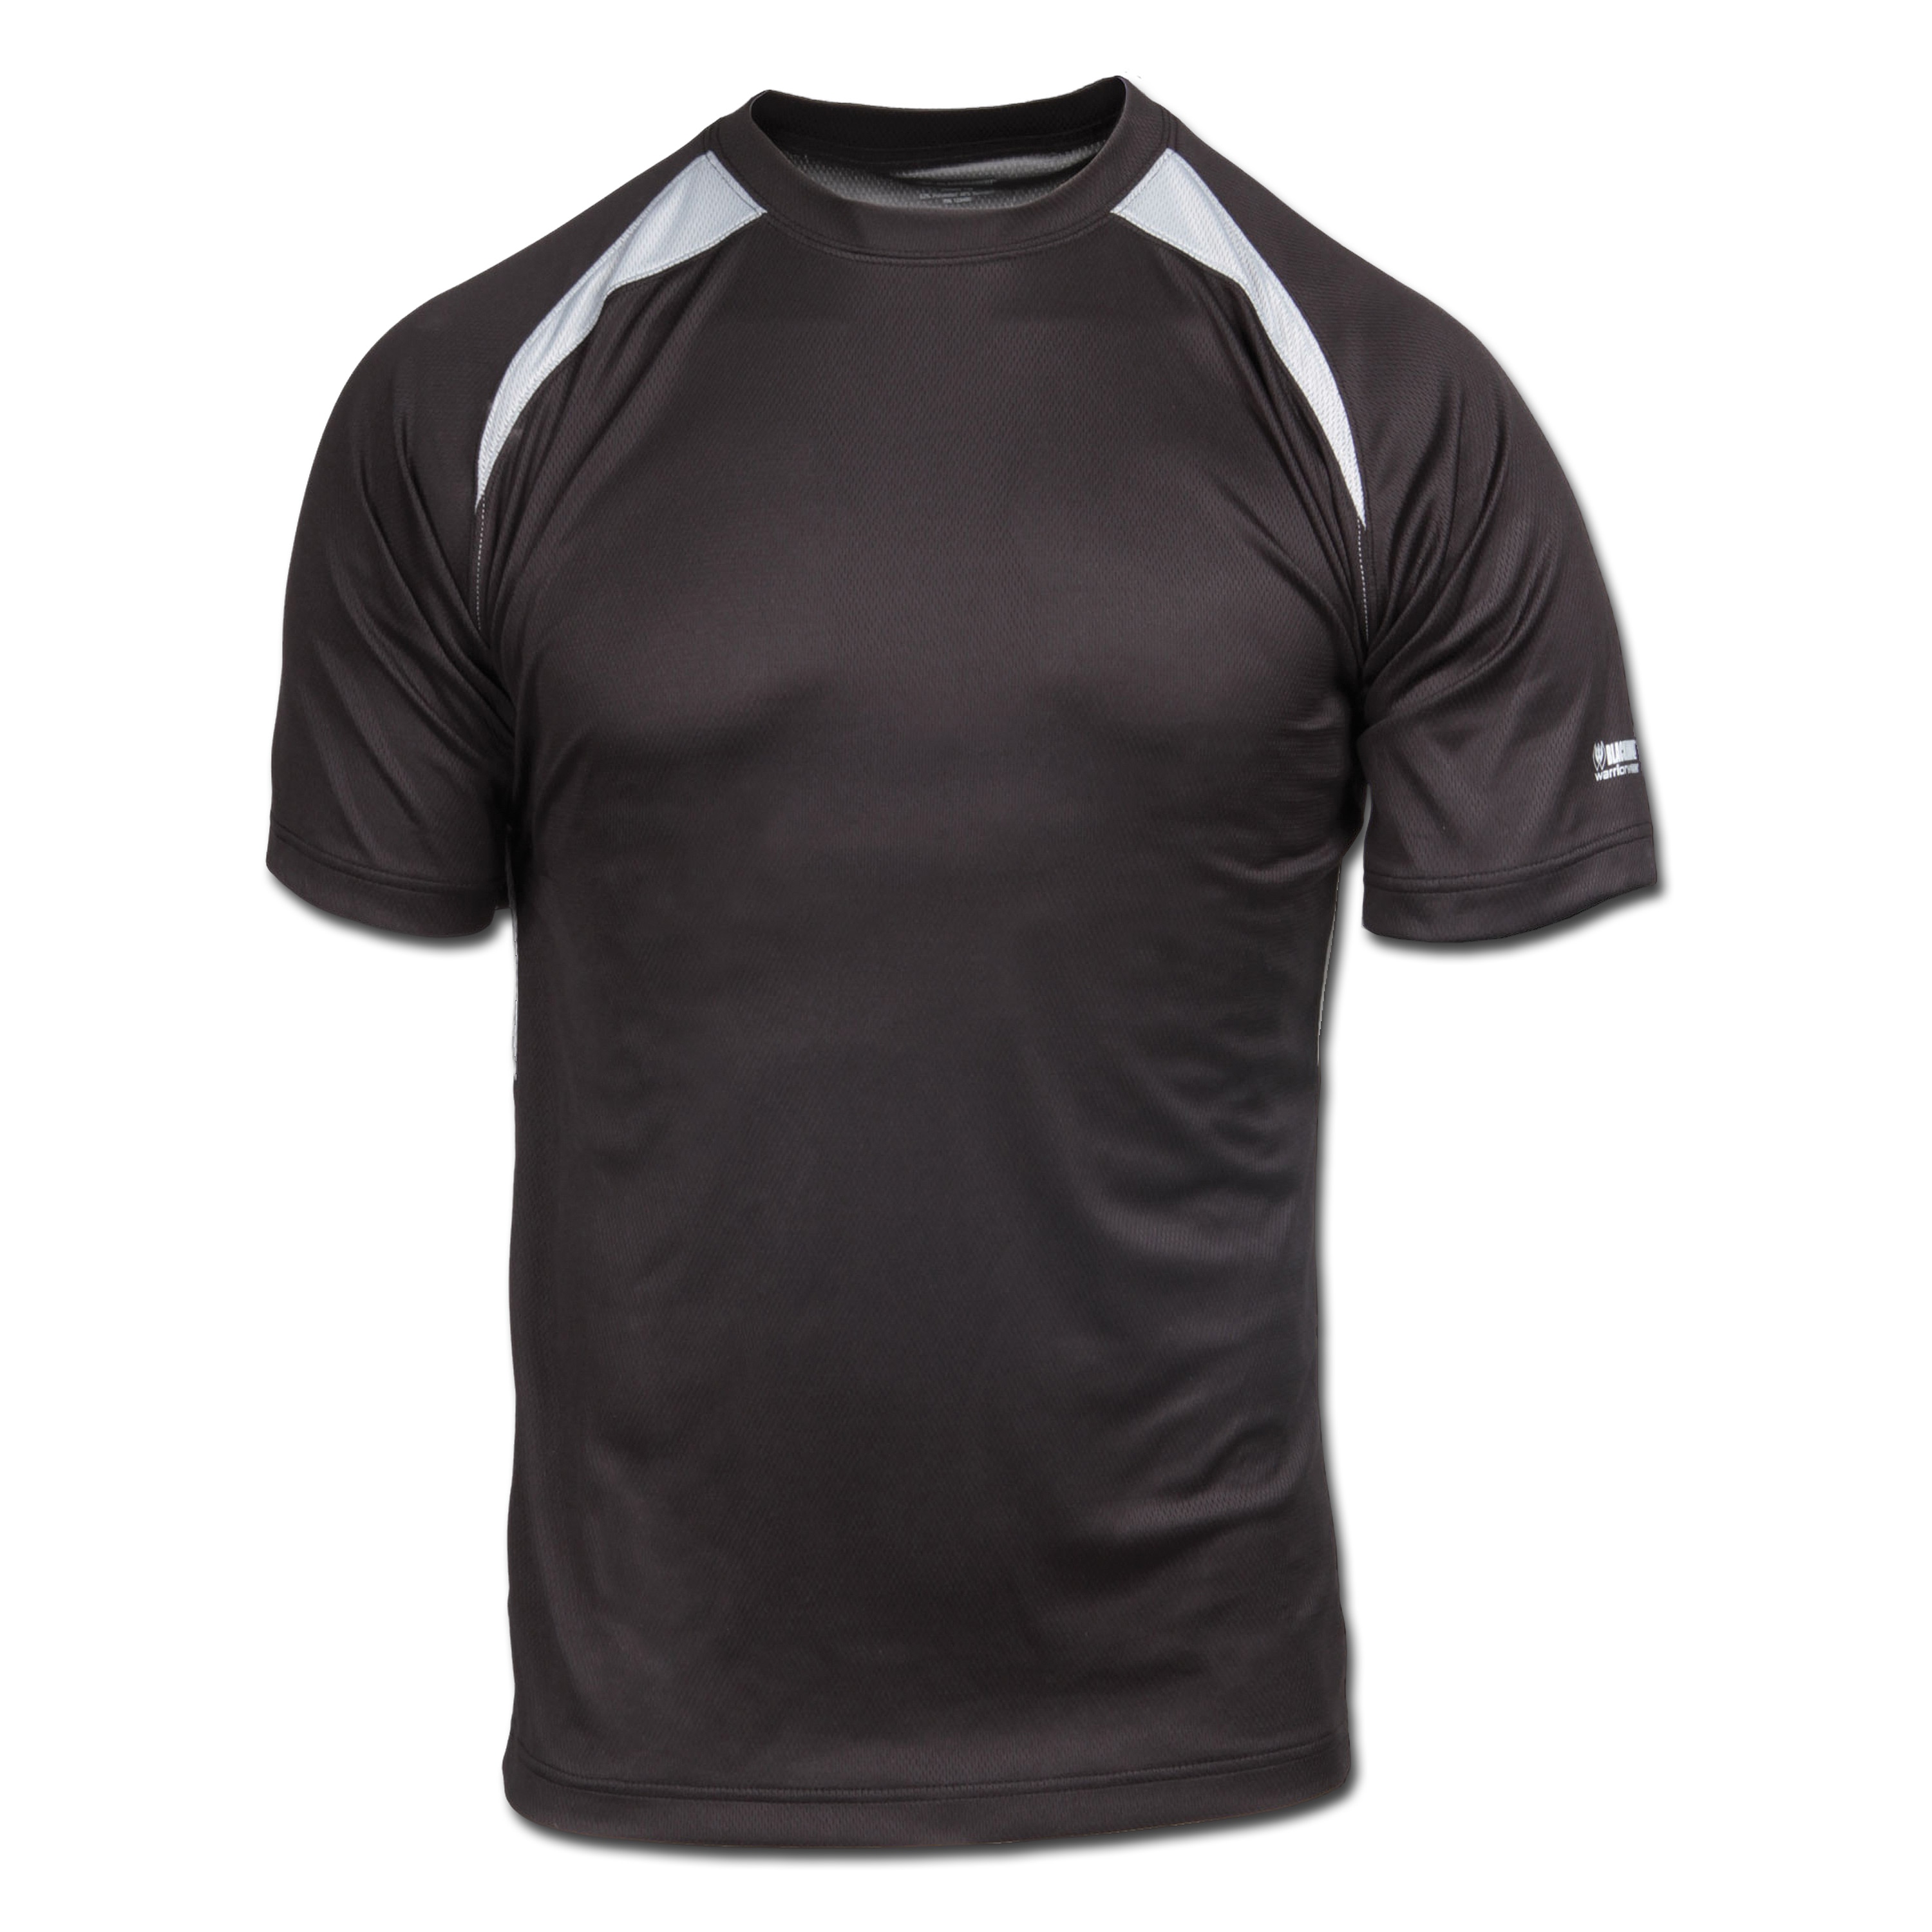 Blackhawk Athletic Crew Shirt black | Blackhawk Athletic Crew Shirt ...